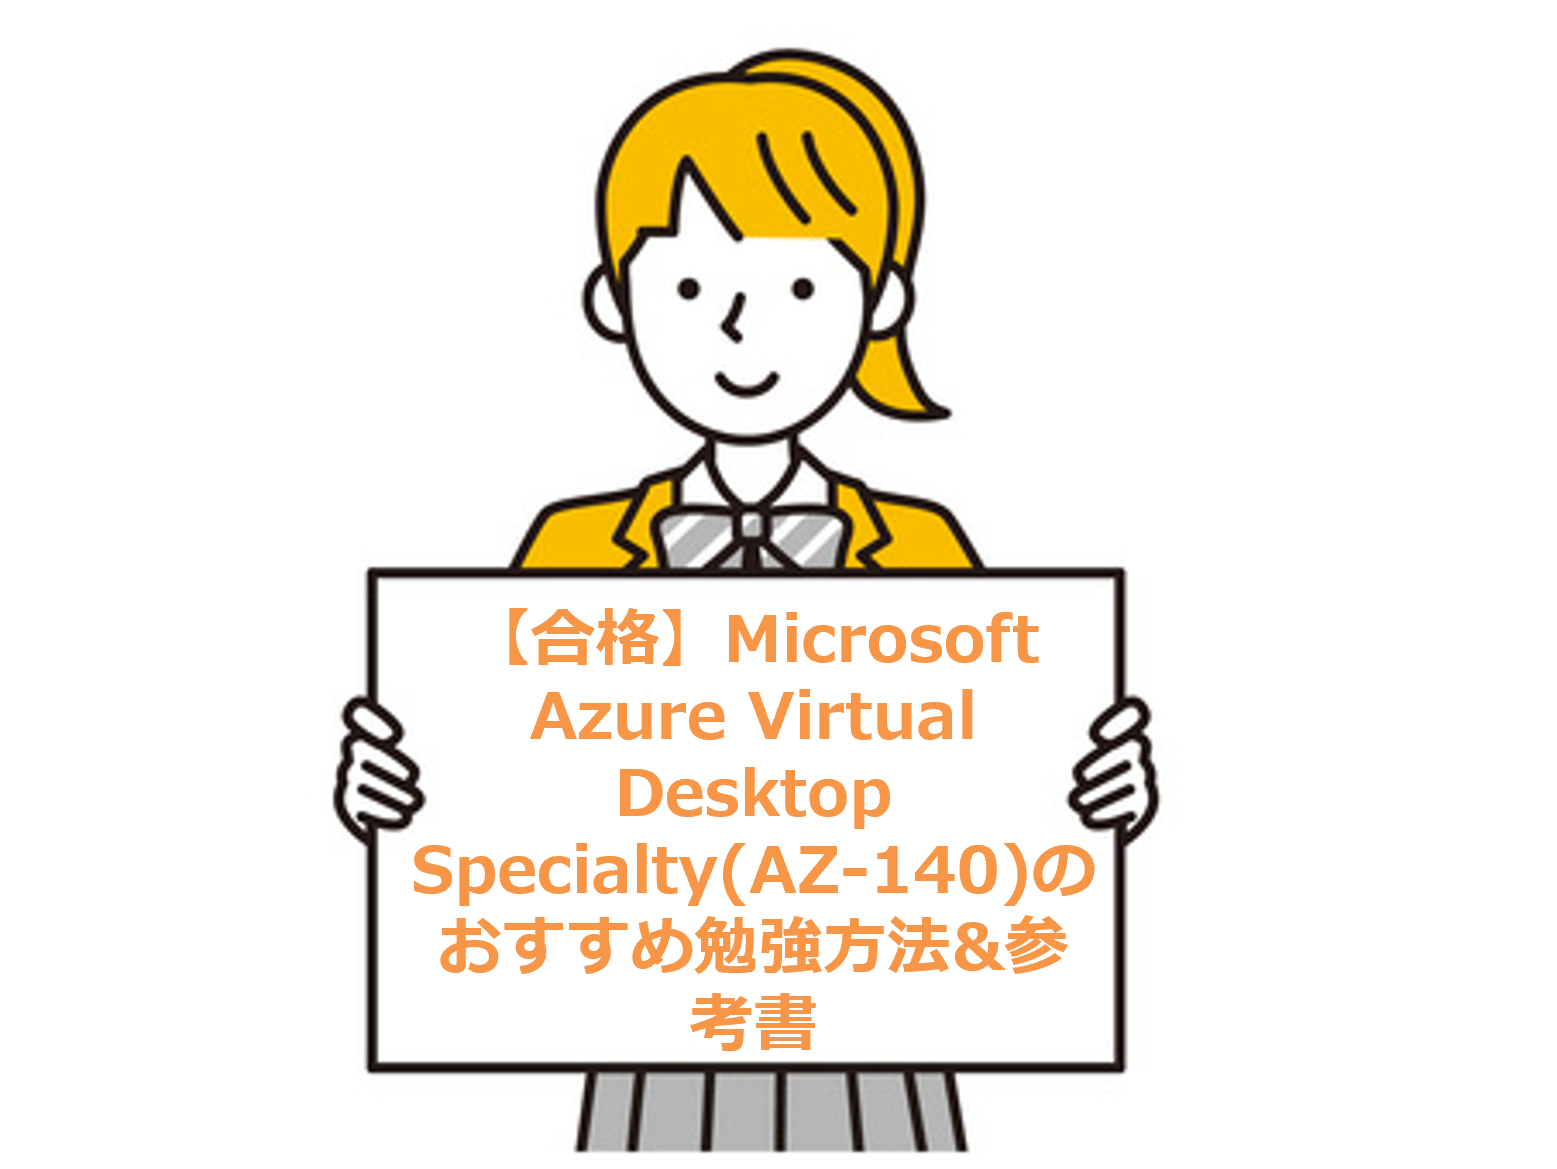 Microsoft Azure Virtual Desktop Specialty(AZ-140)